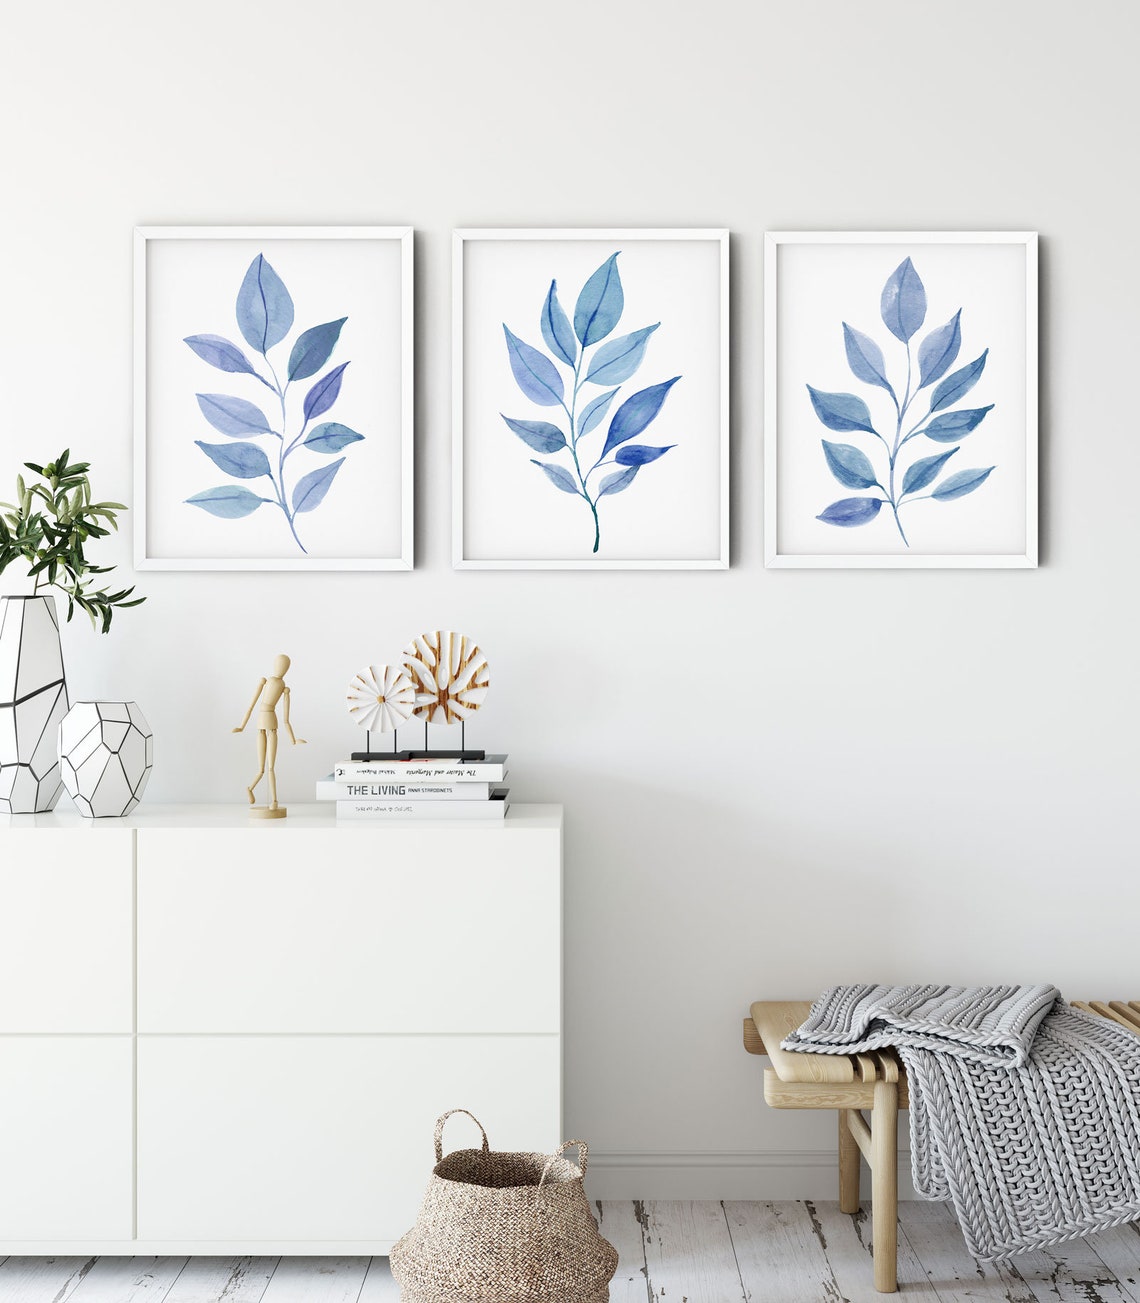 Botanical Wall Art in Blue, Leaf-Print Bedroom Wall Decor